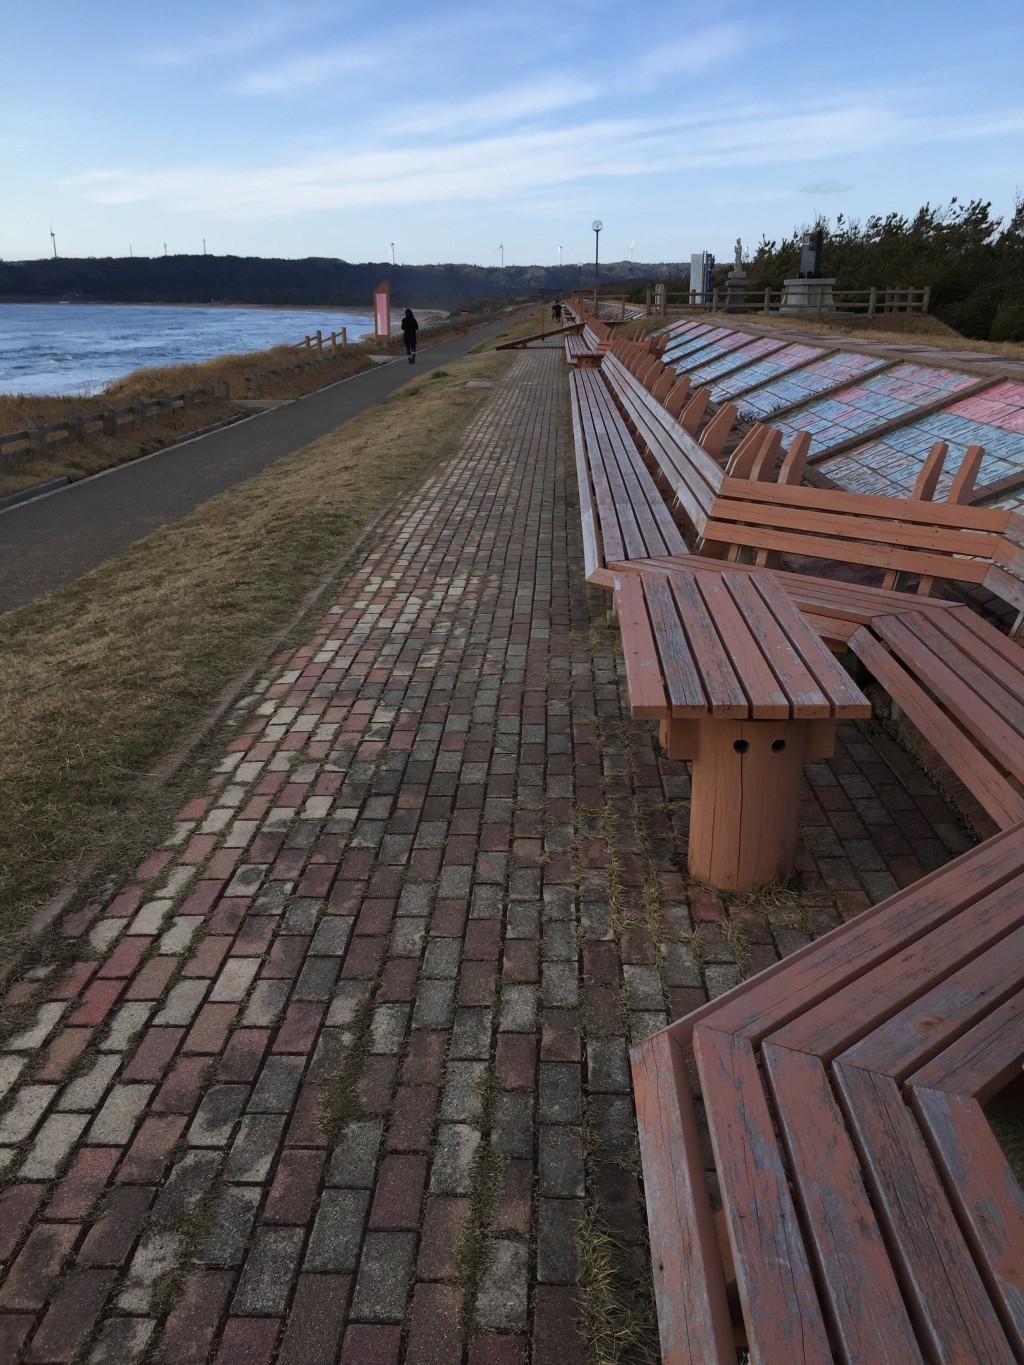 World's longest bench